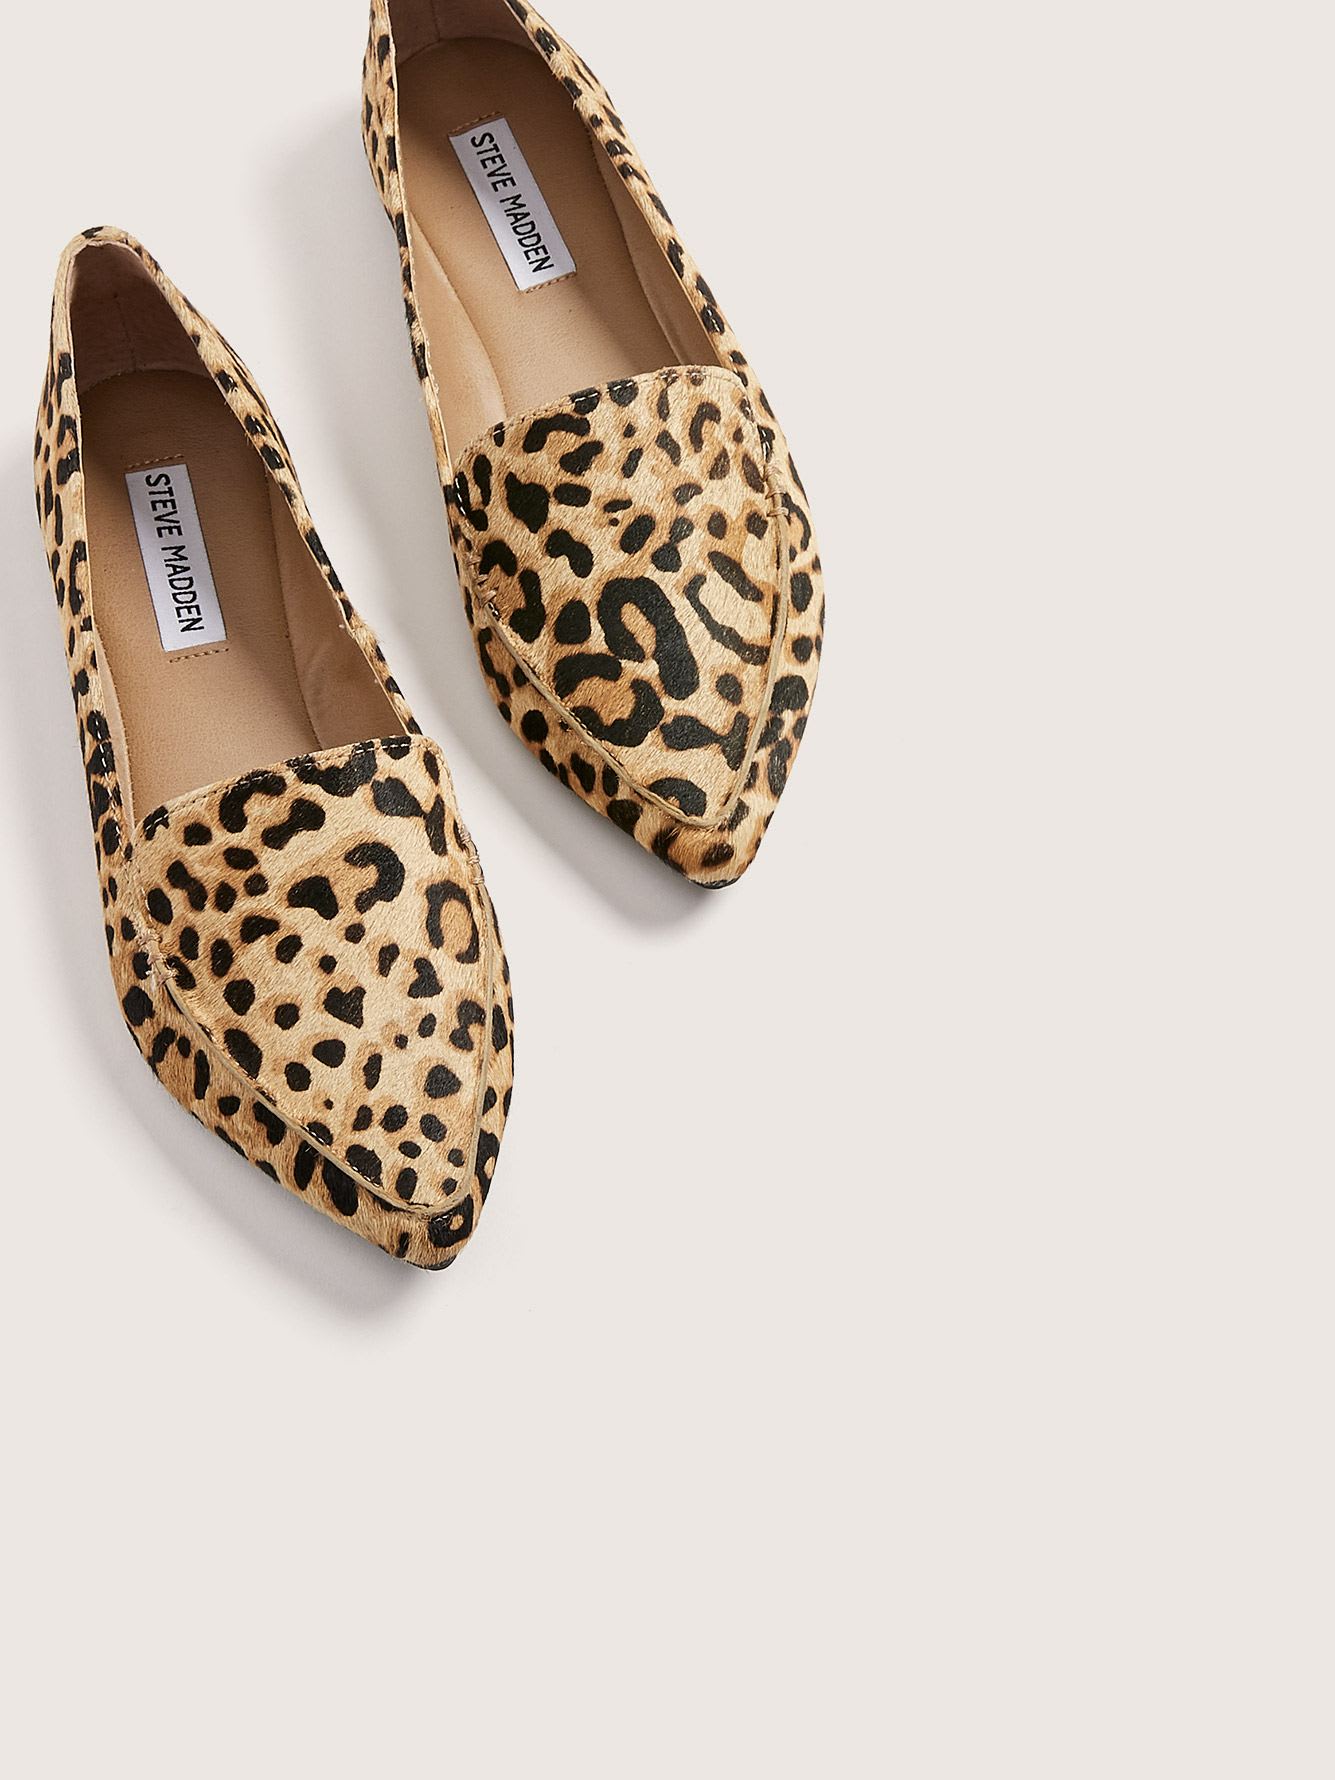 steve madden leopard loafers